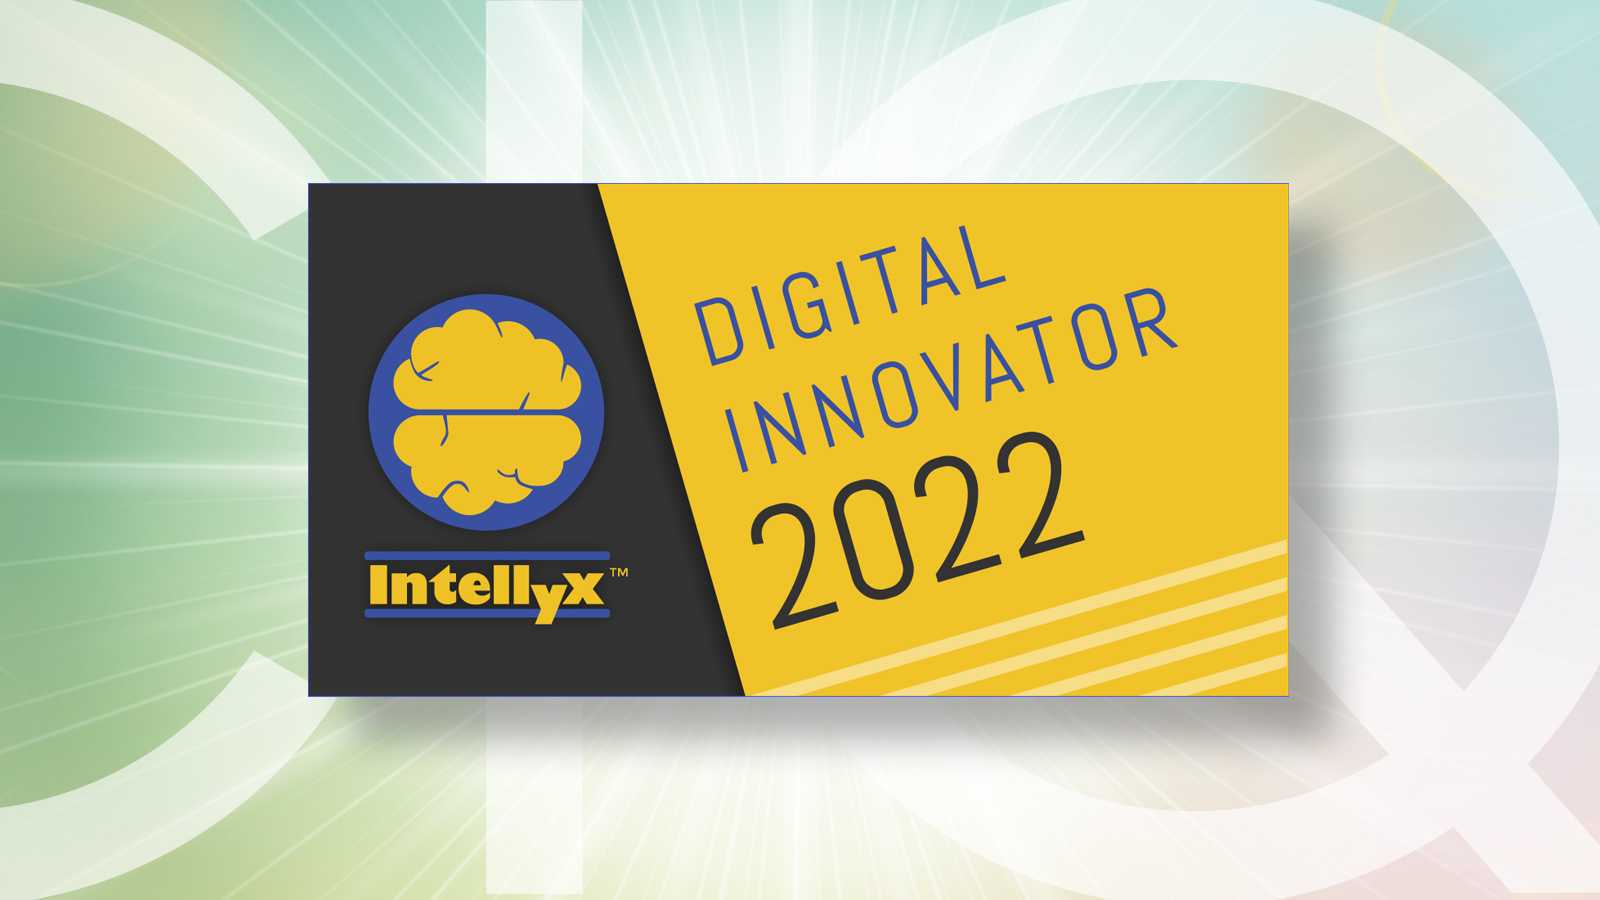 CIQ Wins the 2022 Digital Innovator Award from Intellyx